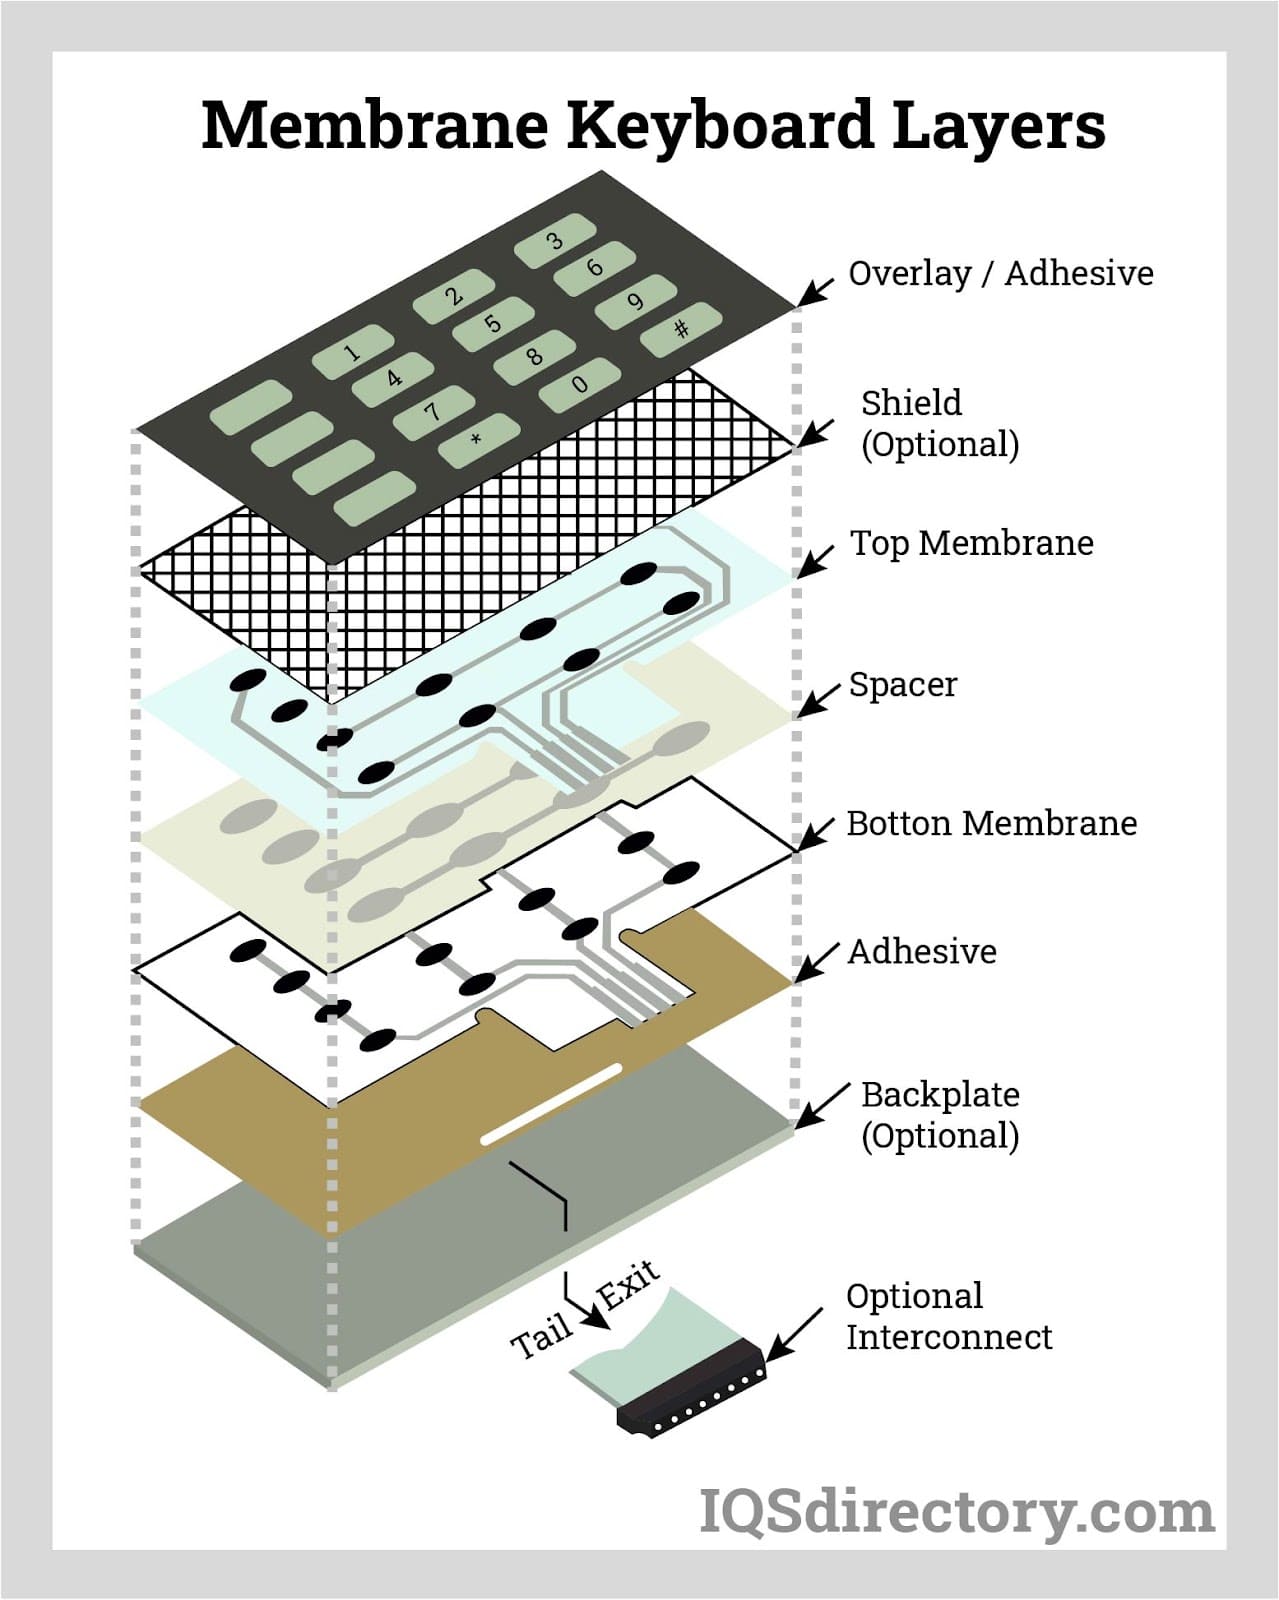 Membrane Keyboard Layers